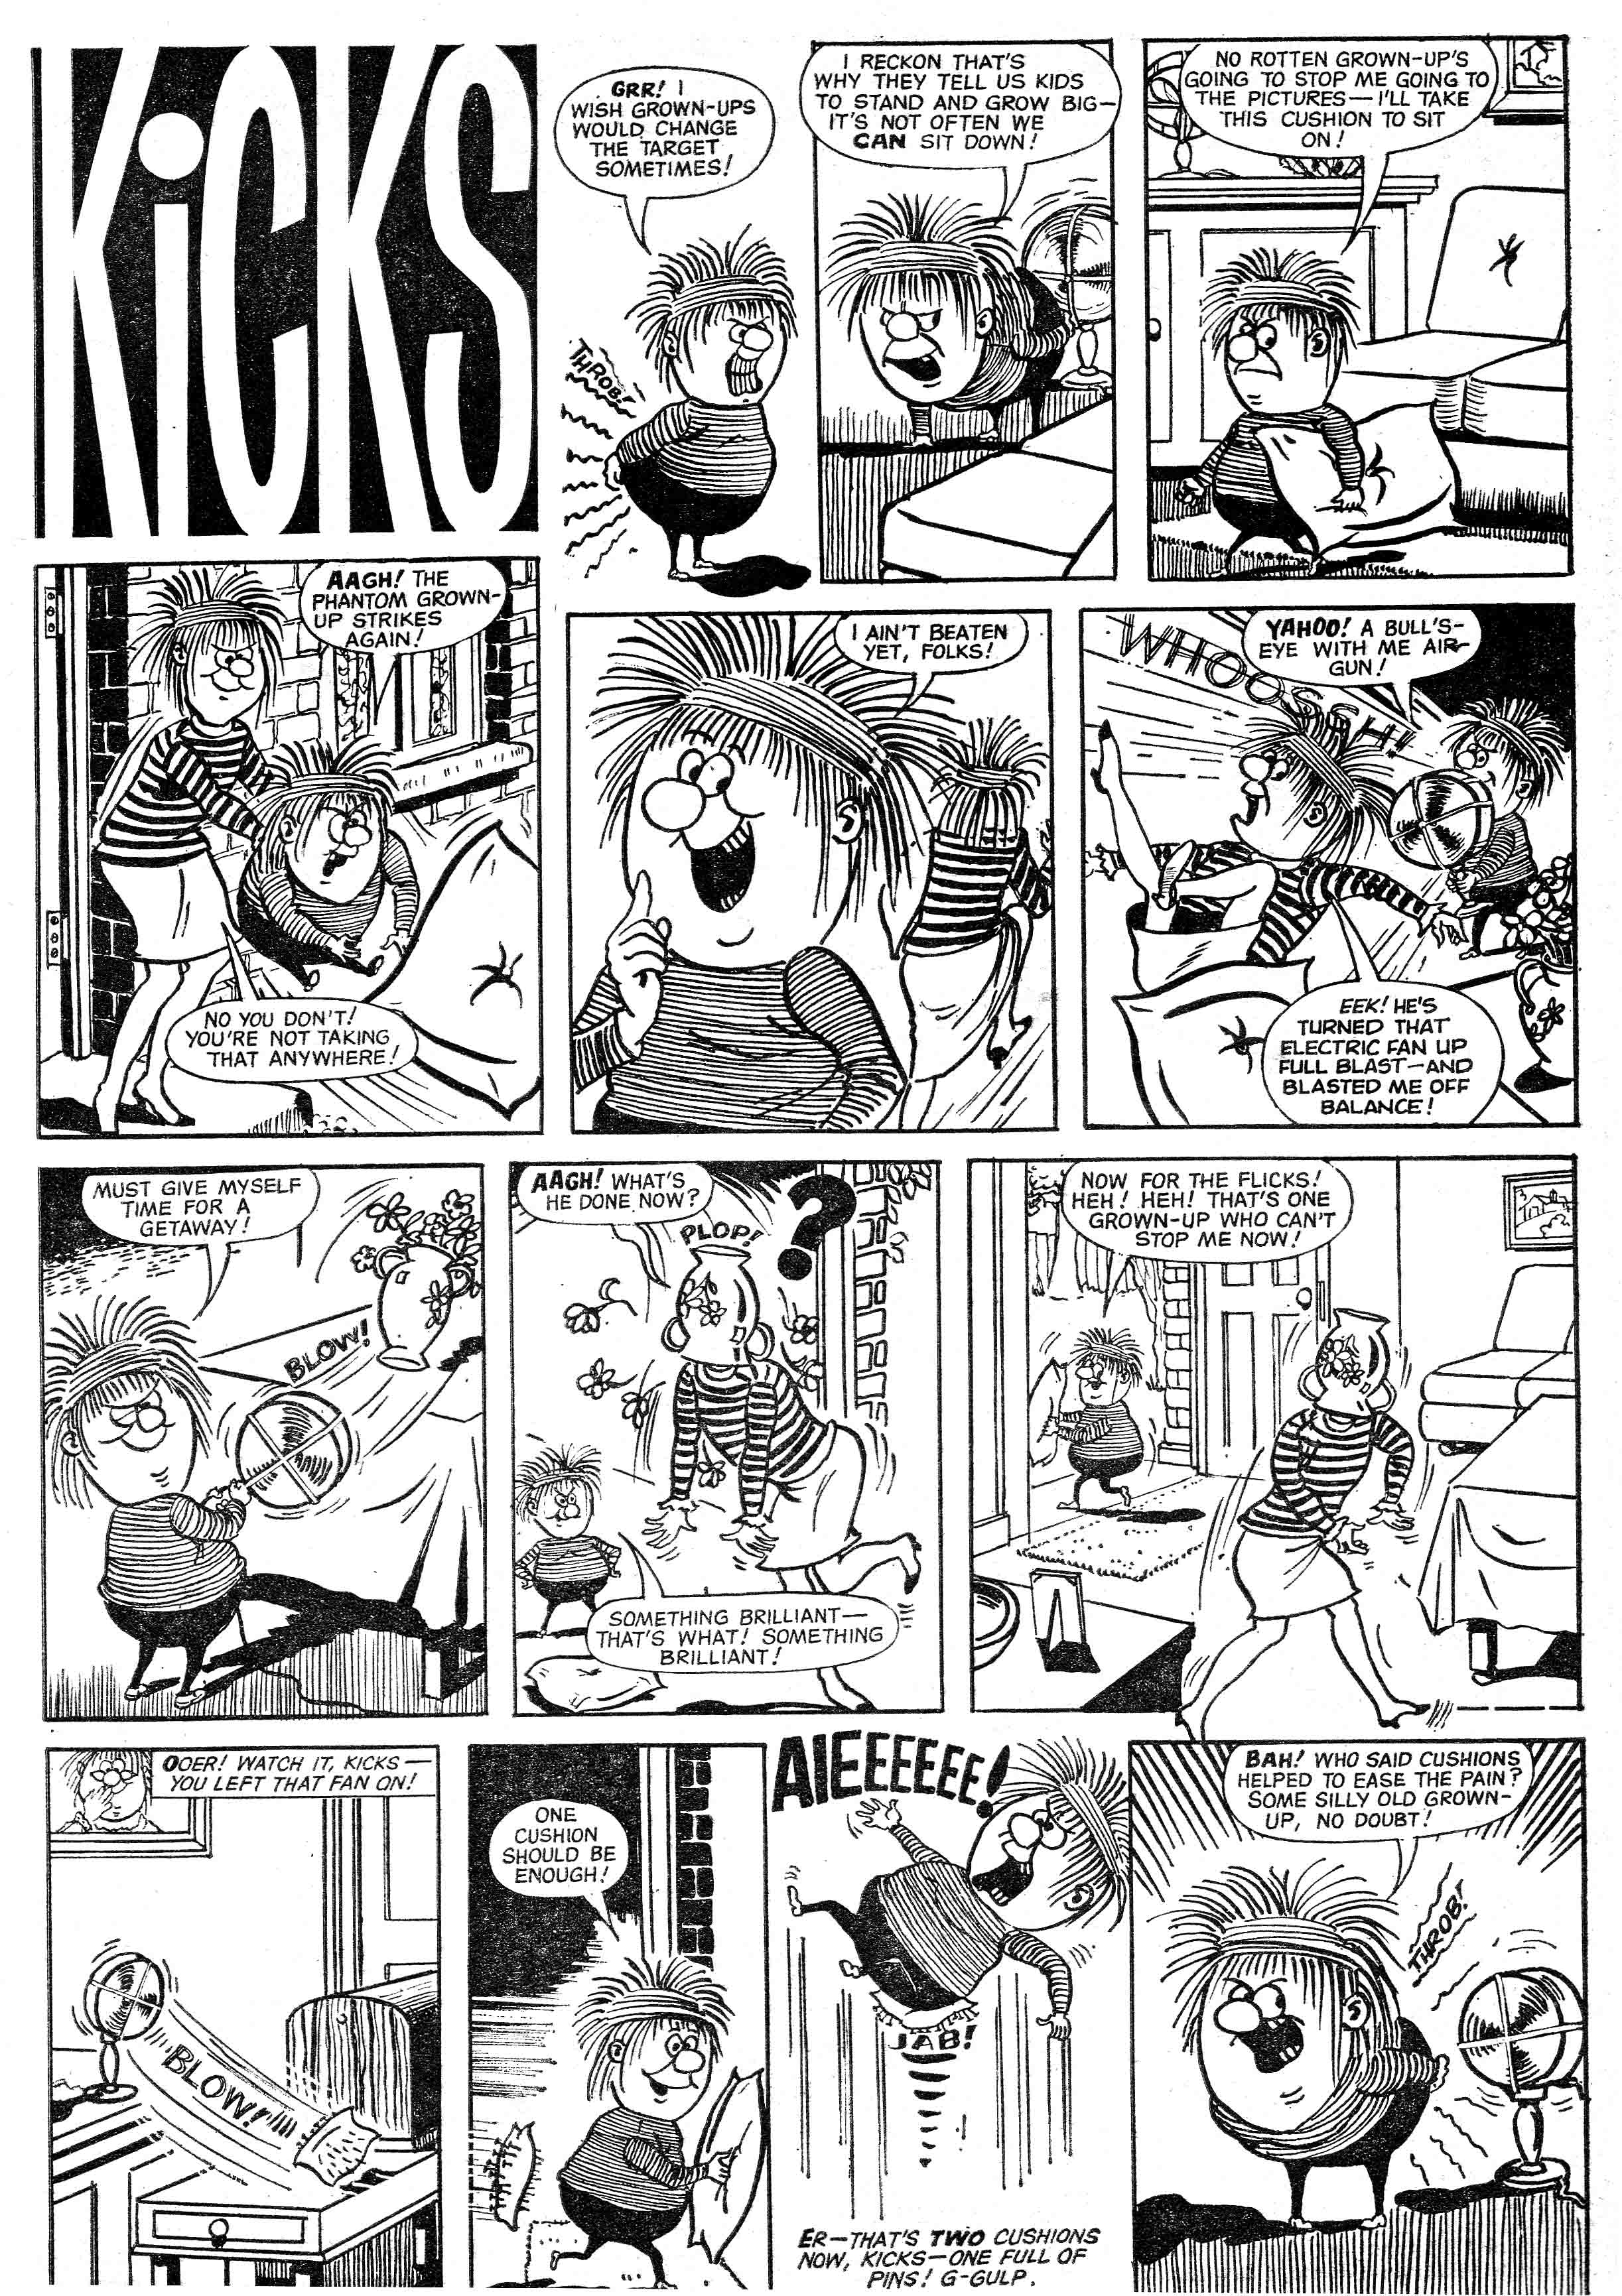 Read online Pow! comic -  Issue #75 - 16